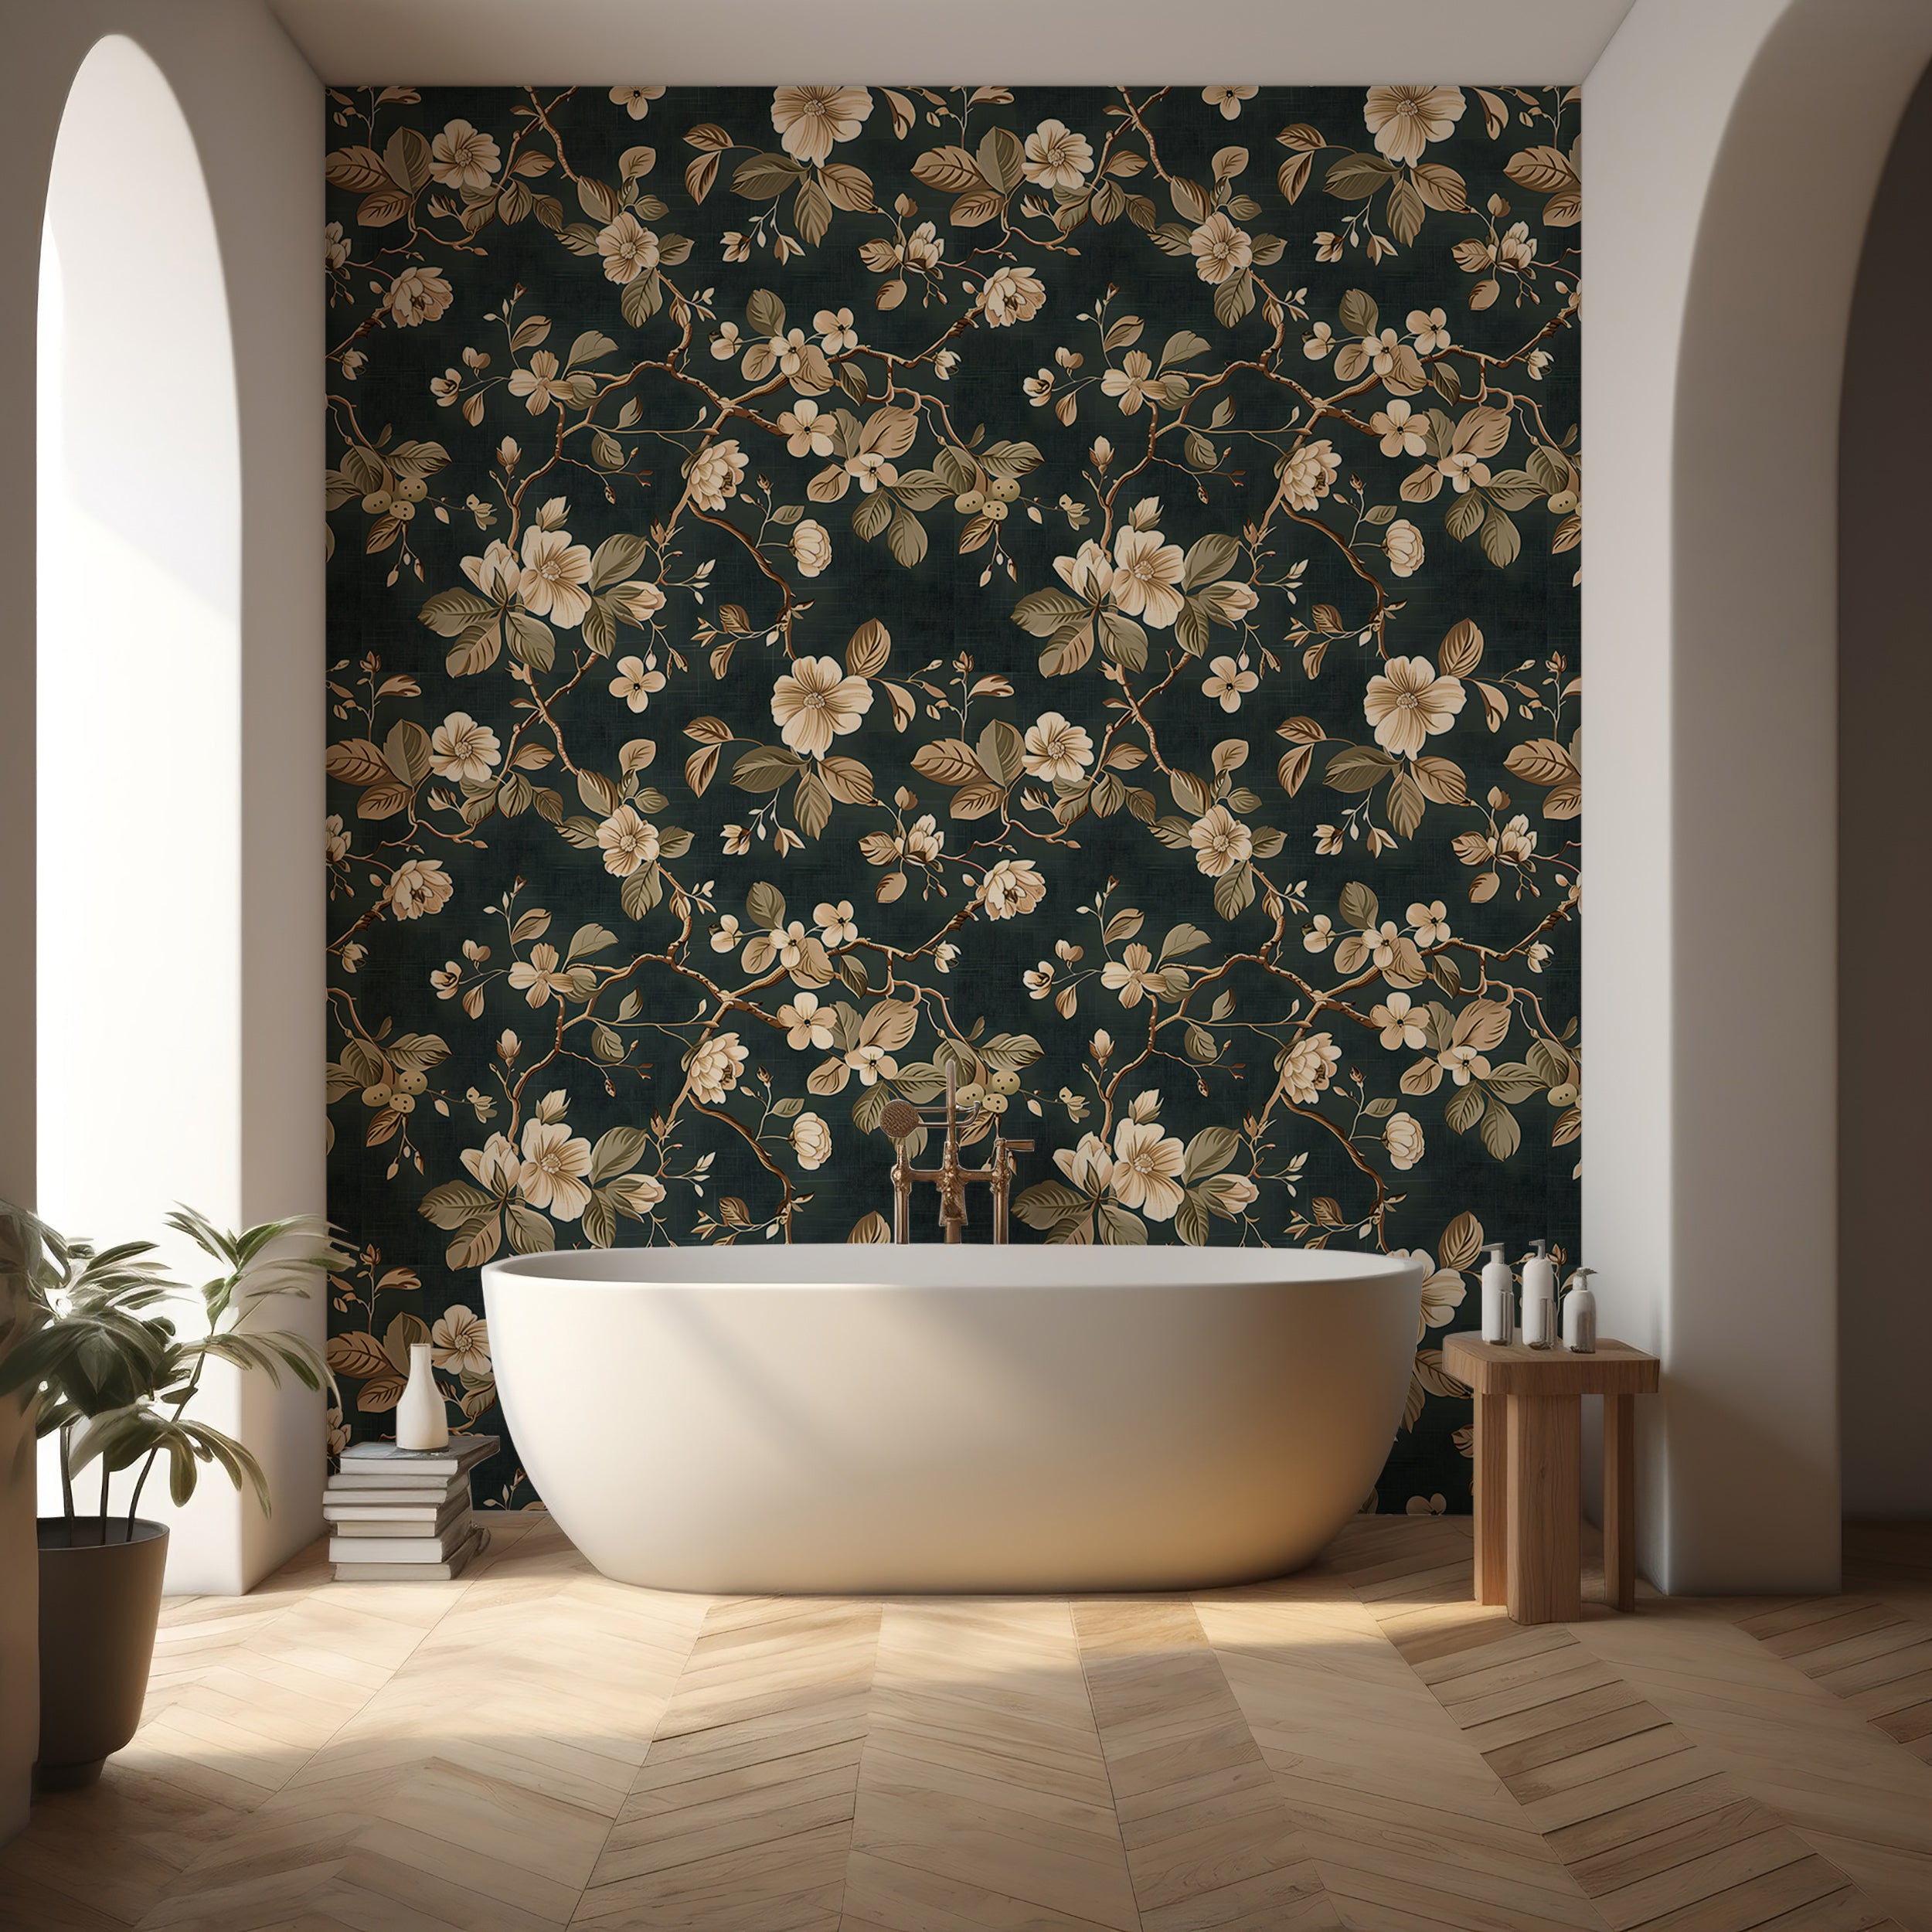 Peel and stick dark floral wallpaper Removable green botanical wallpaper